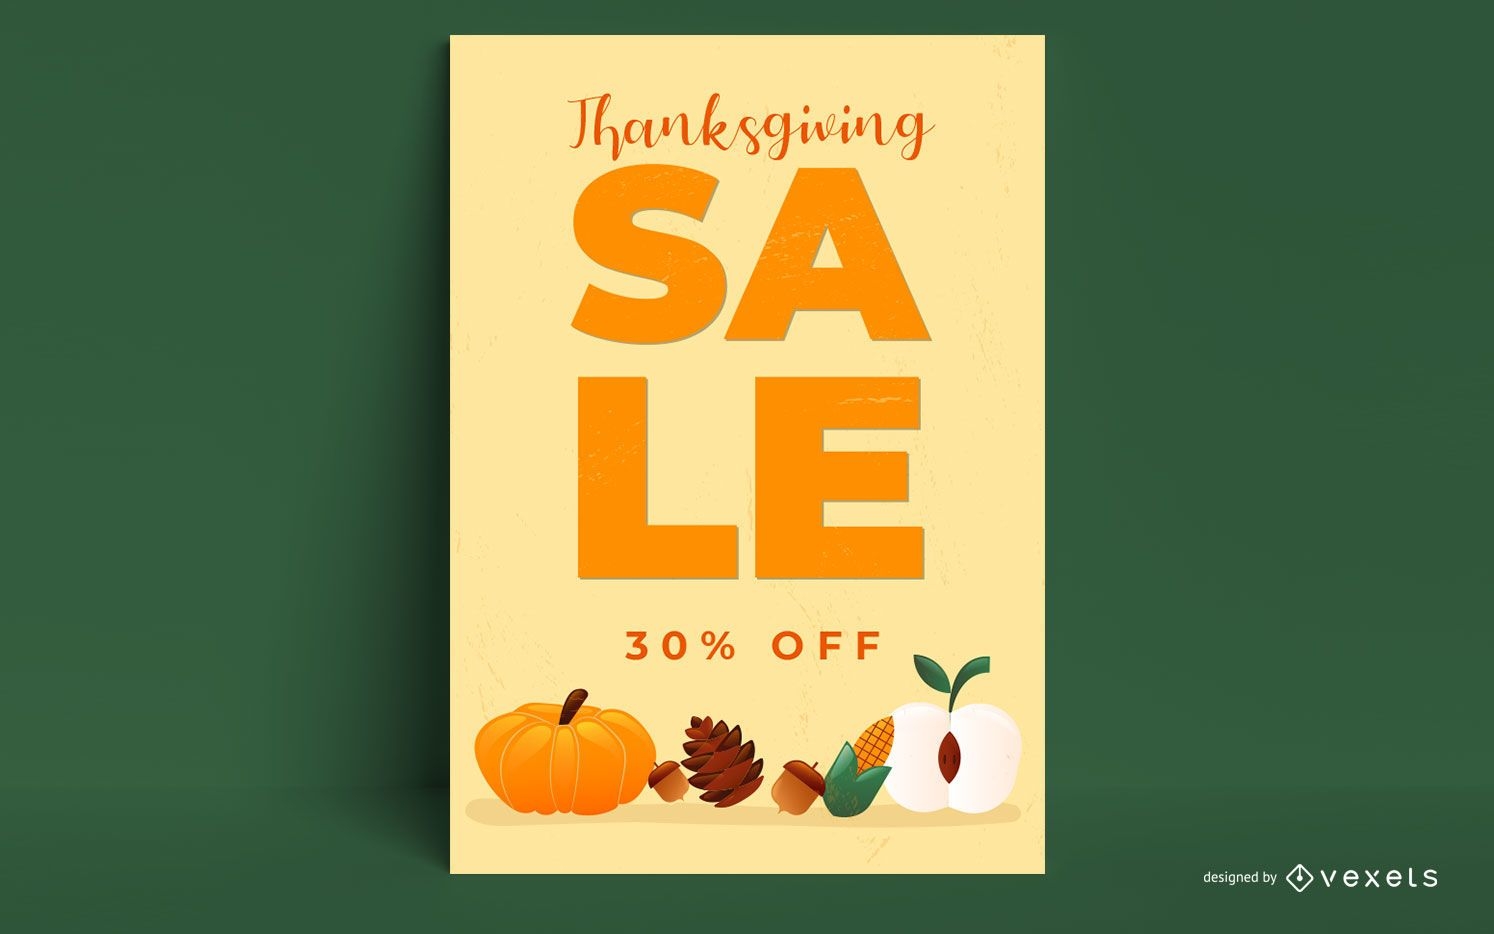 Thanksgiving promo poster design